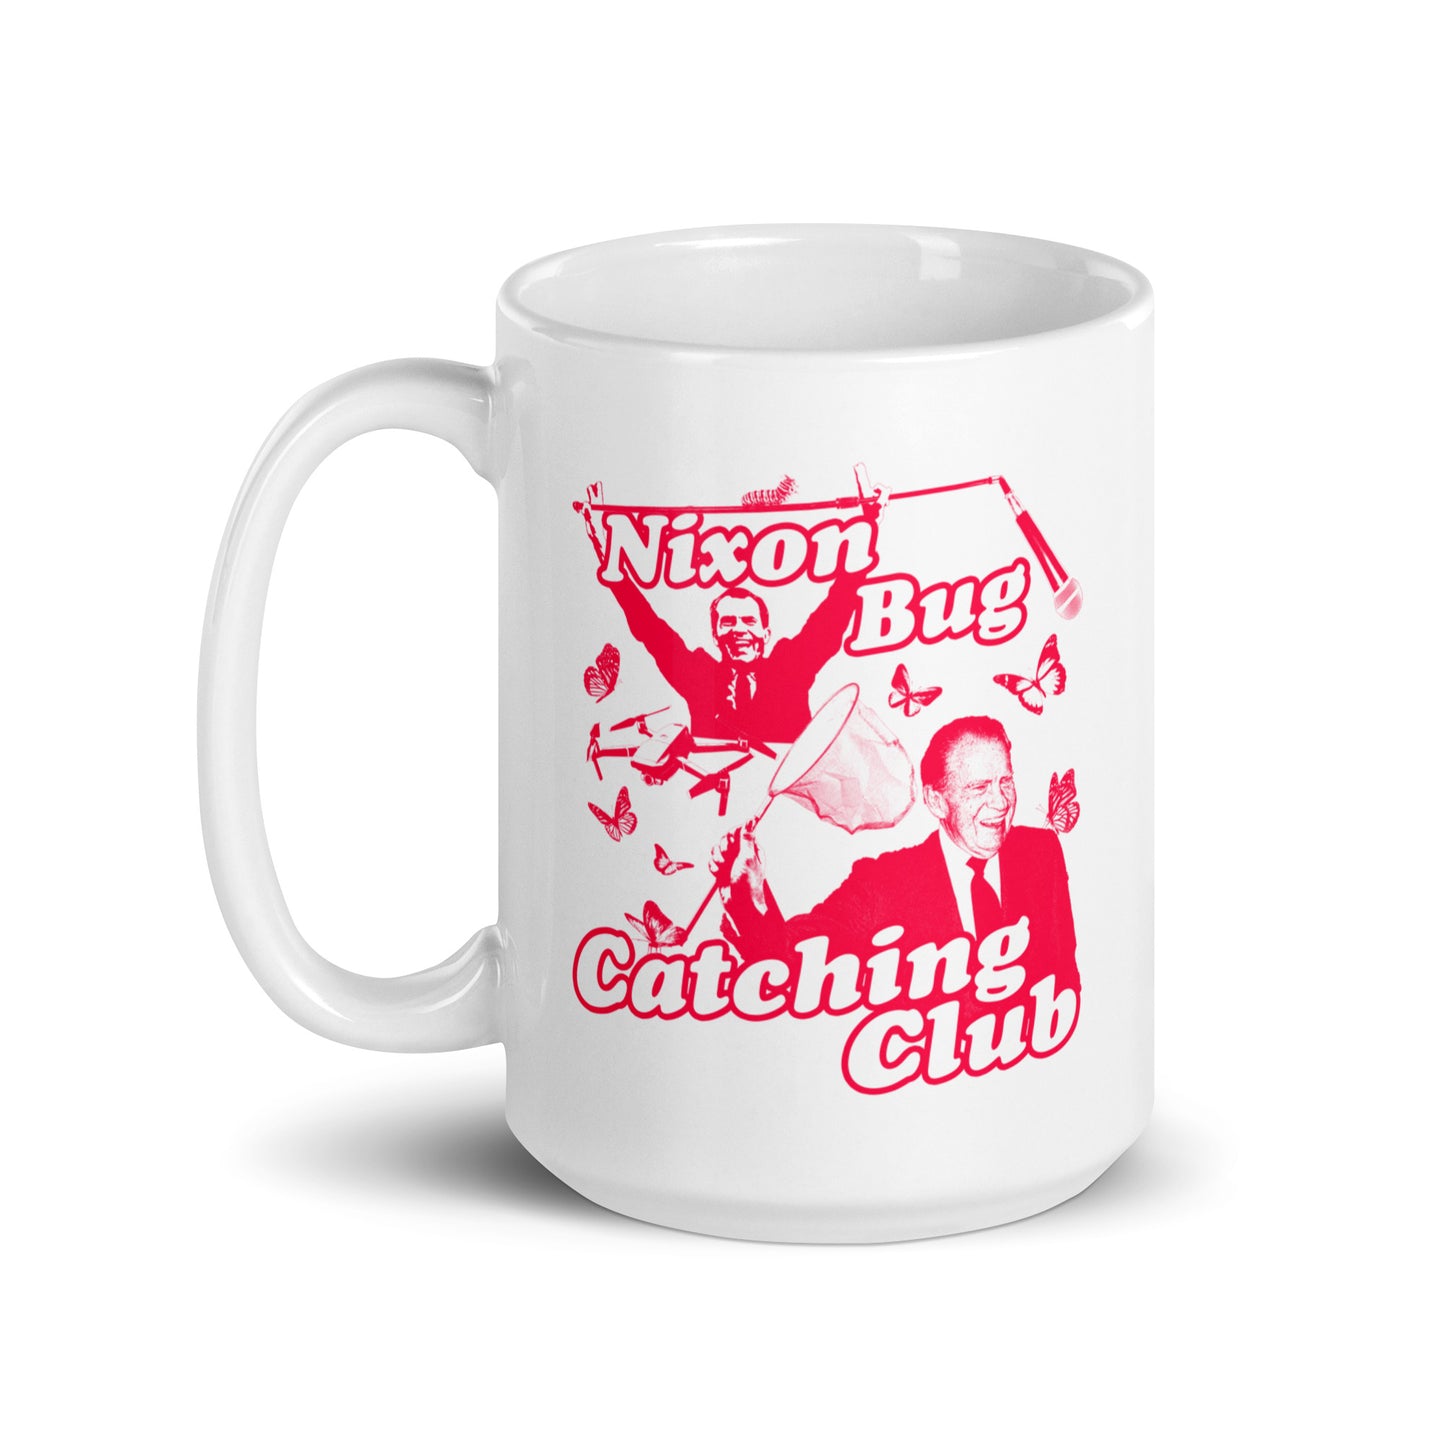 Nixon Bug Catching Club mug